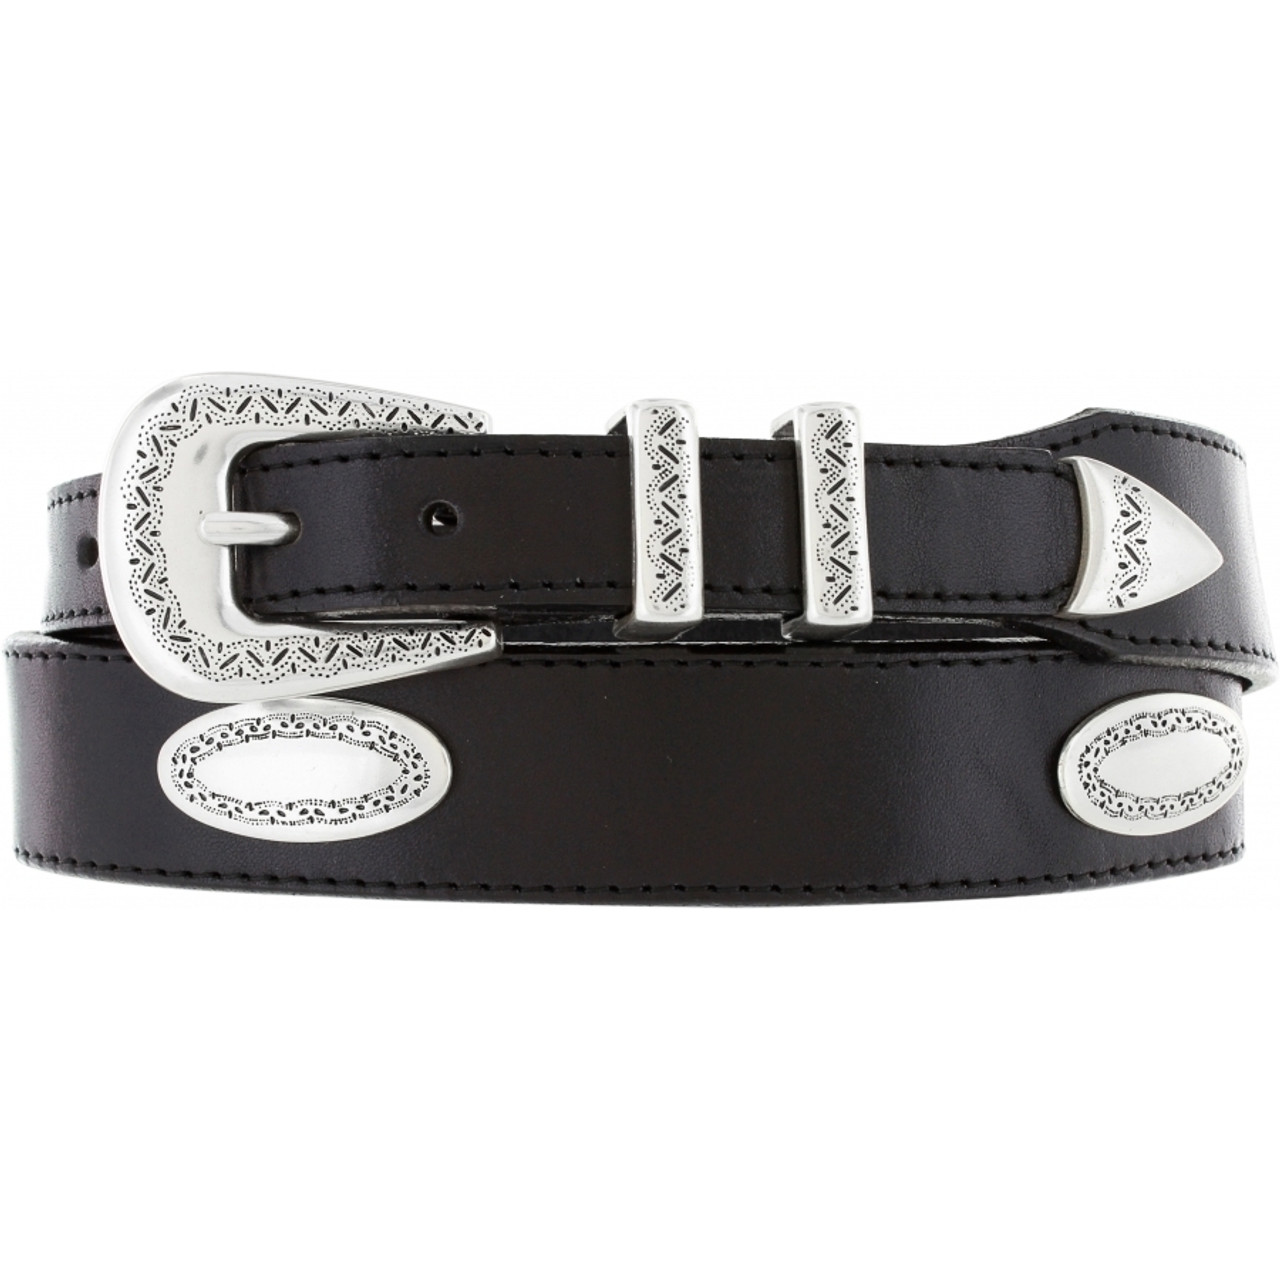 Ornamental Taper Belt - Black by Brighton (Sizes 32-42)